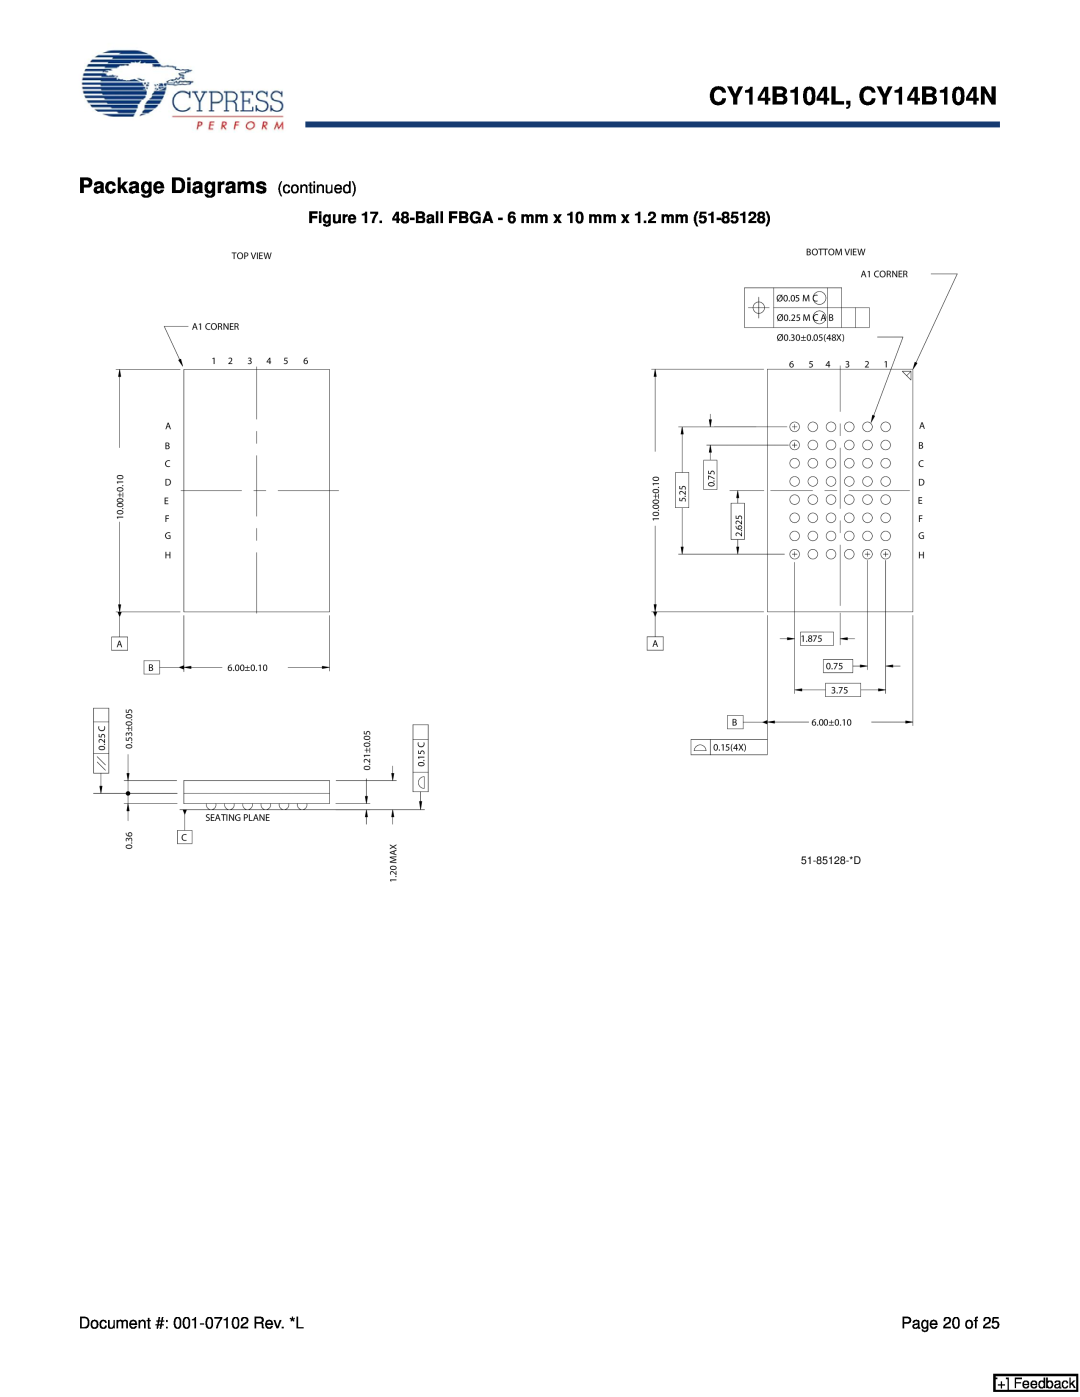 Cypress manual Package Diagrams continued, 48-Ball FBGA - 6 mm x 10 mm x 1.2 mm, CY14B104L, CY14B104N, + Feedback 